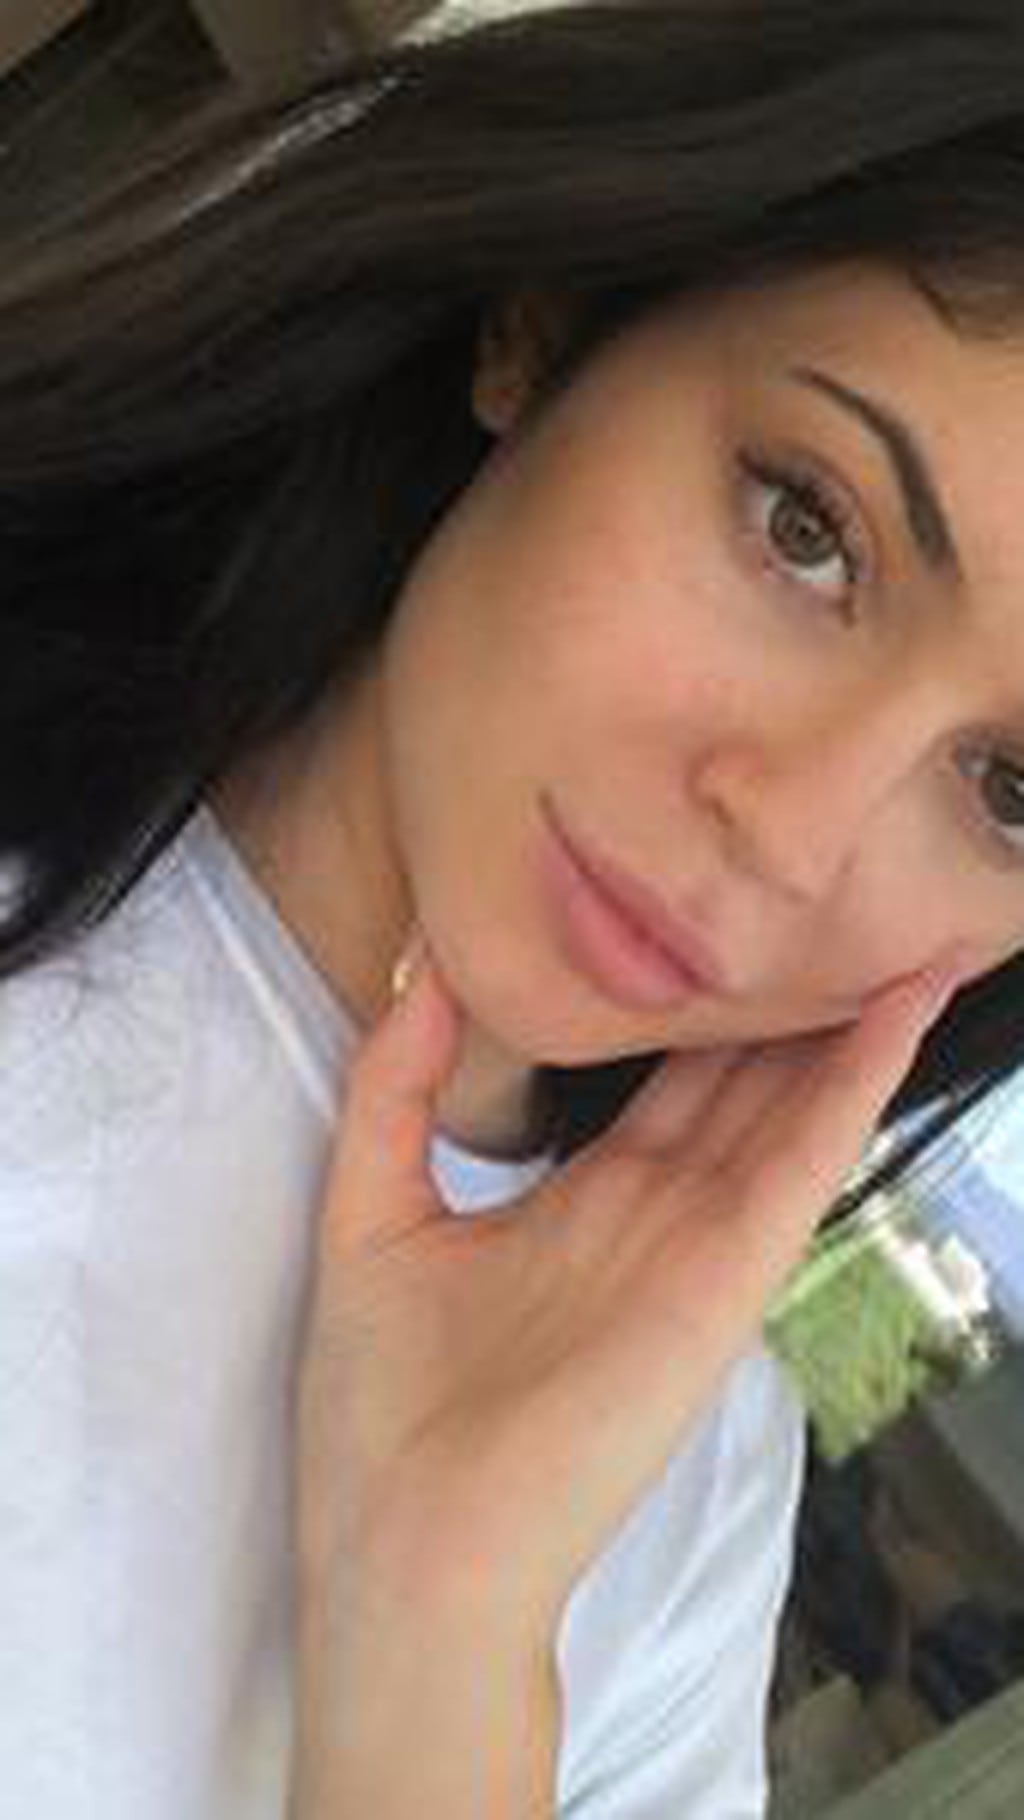 Así respondió Kylie Jenner a las críticas contra sus productos de belleza. (Foto: @kyliejenner)